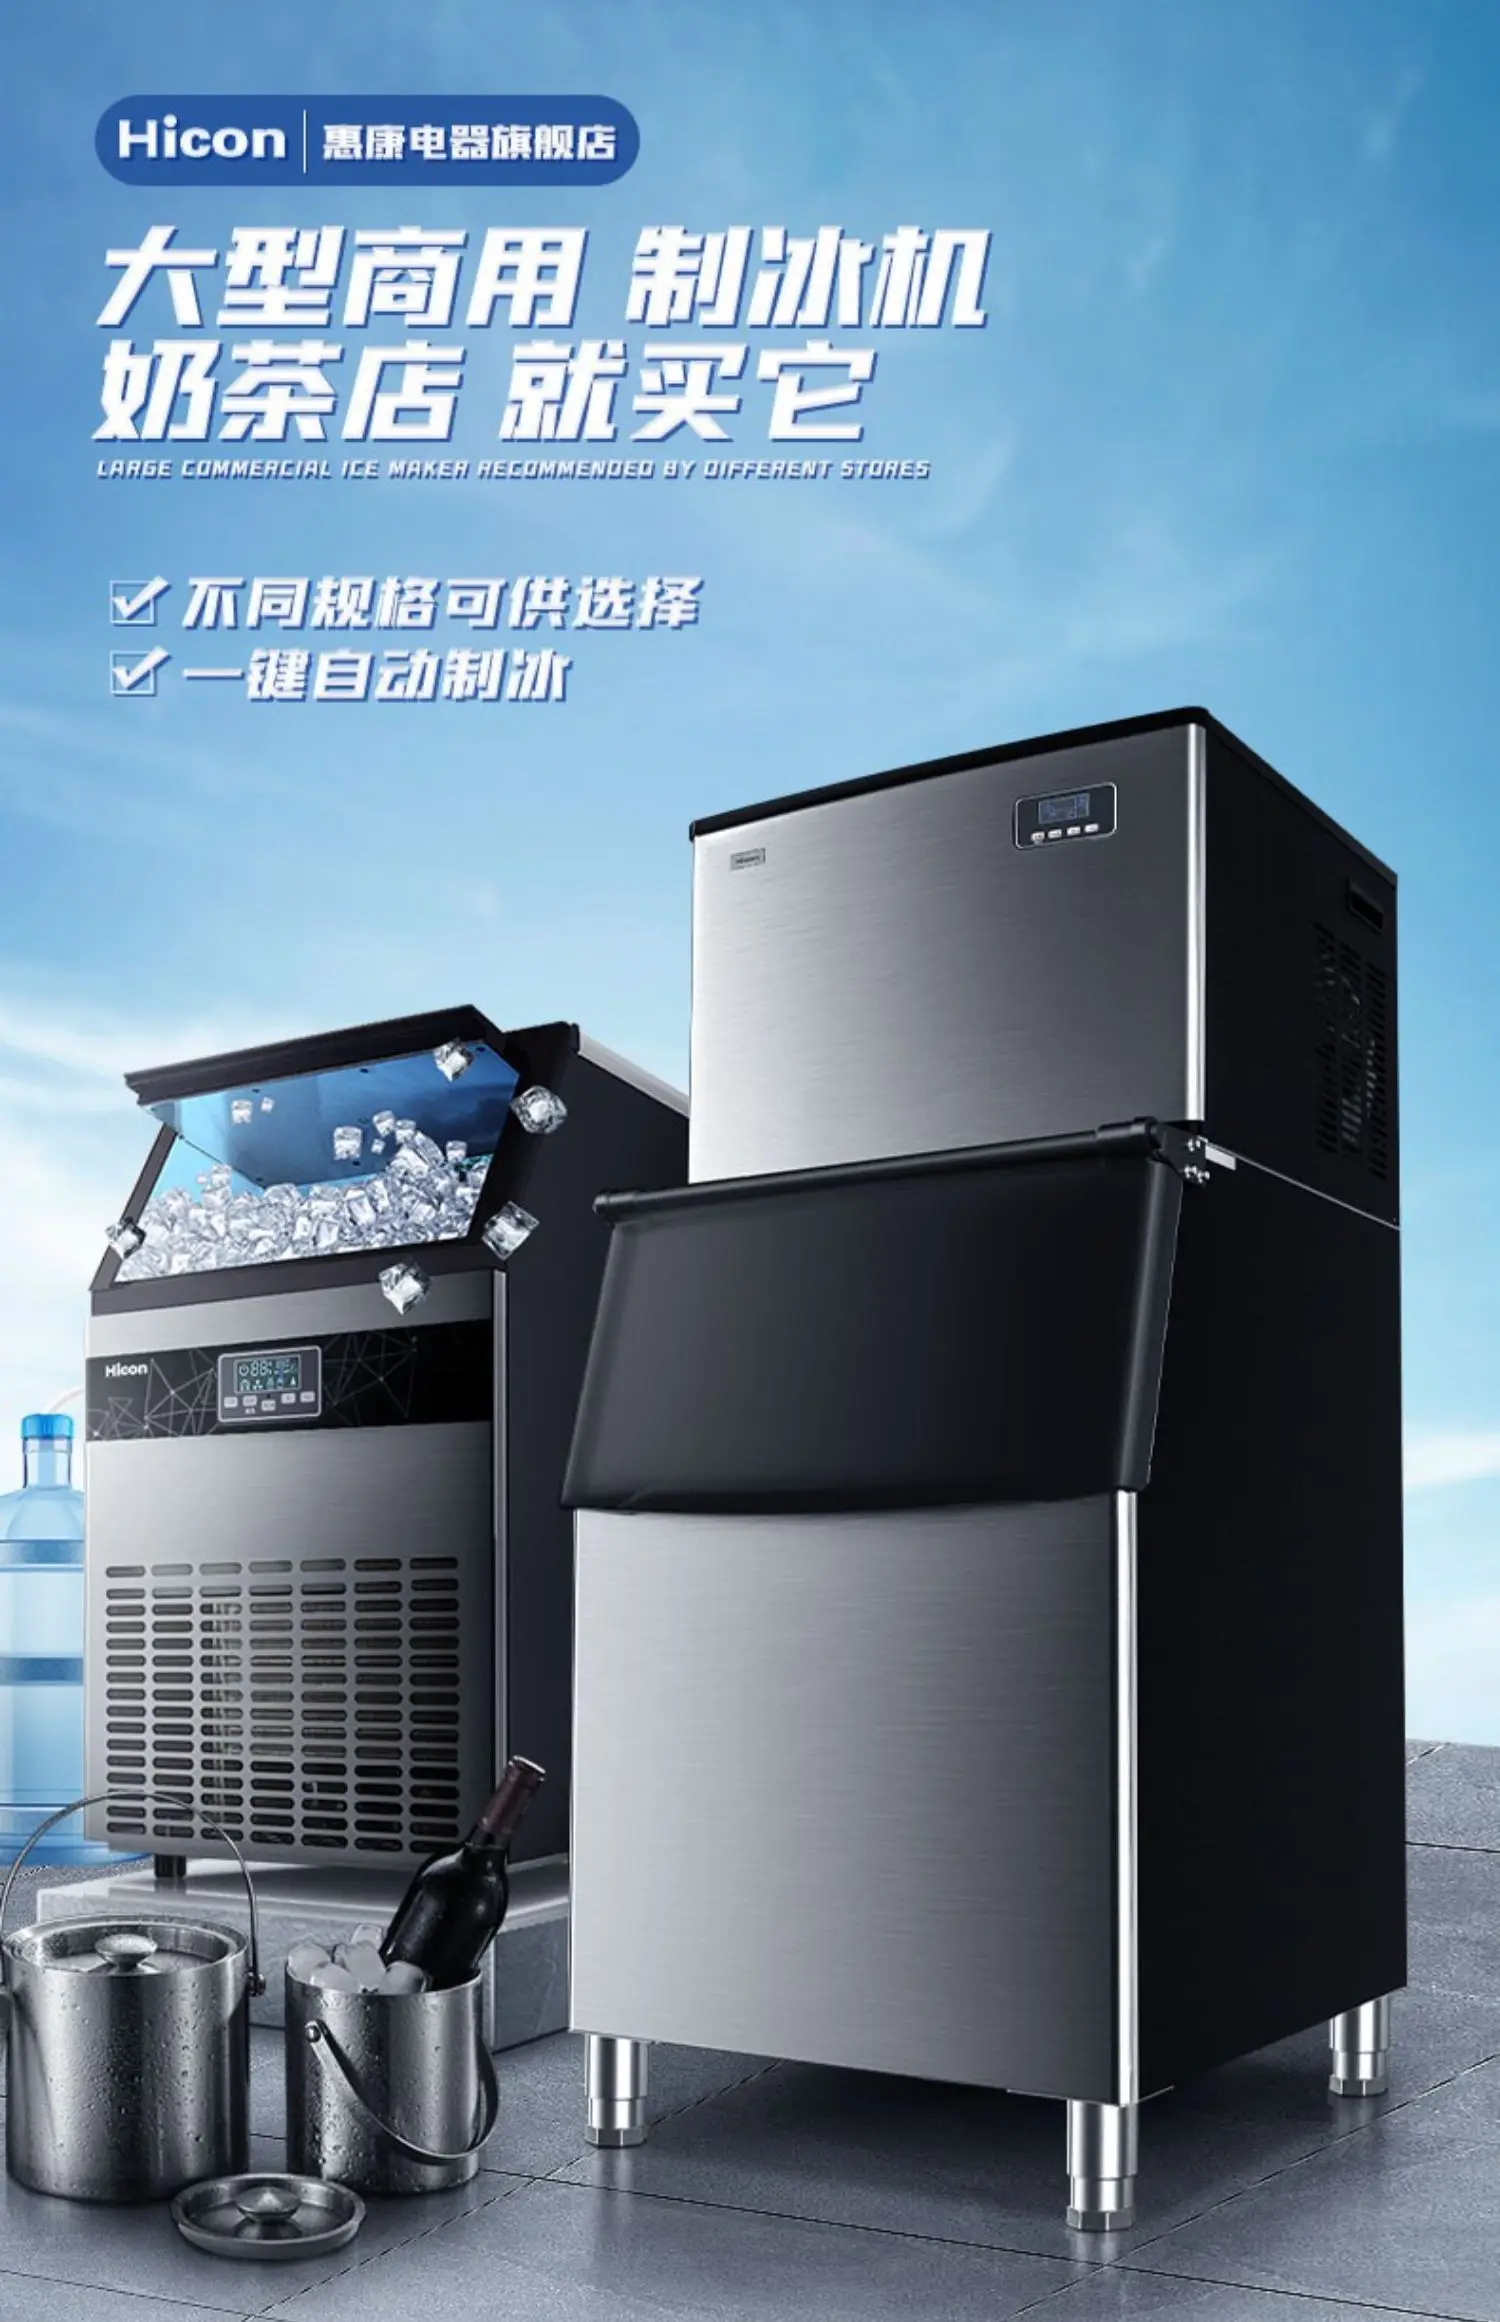 Buy Wholesale China 15-100kg Mini Cube Ice Maker, Small Ice Making